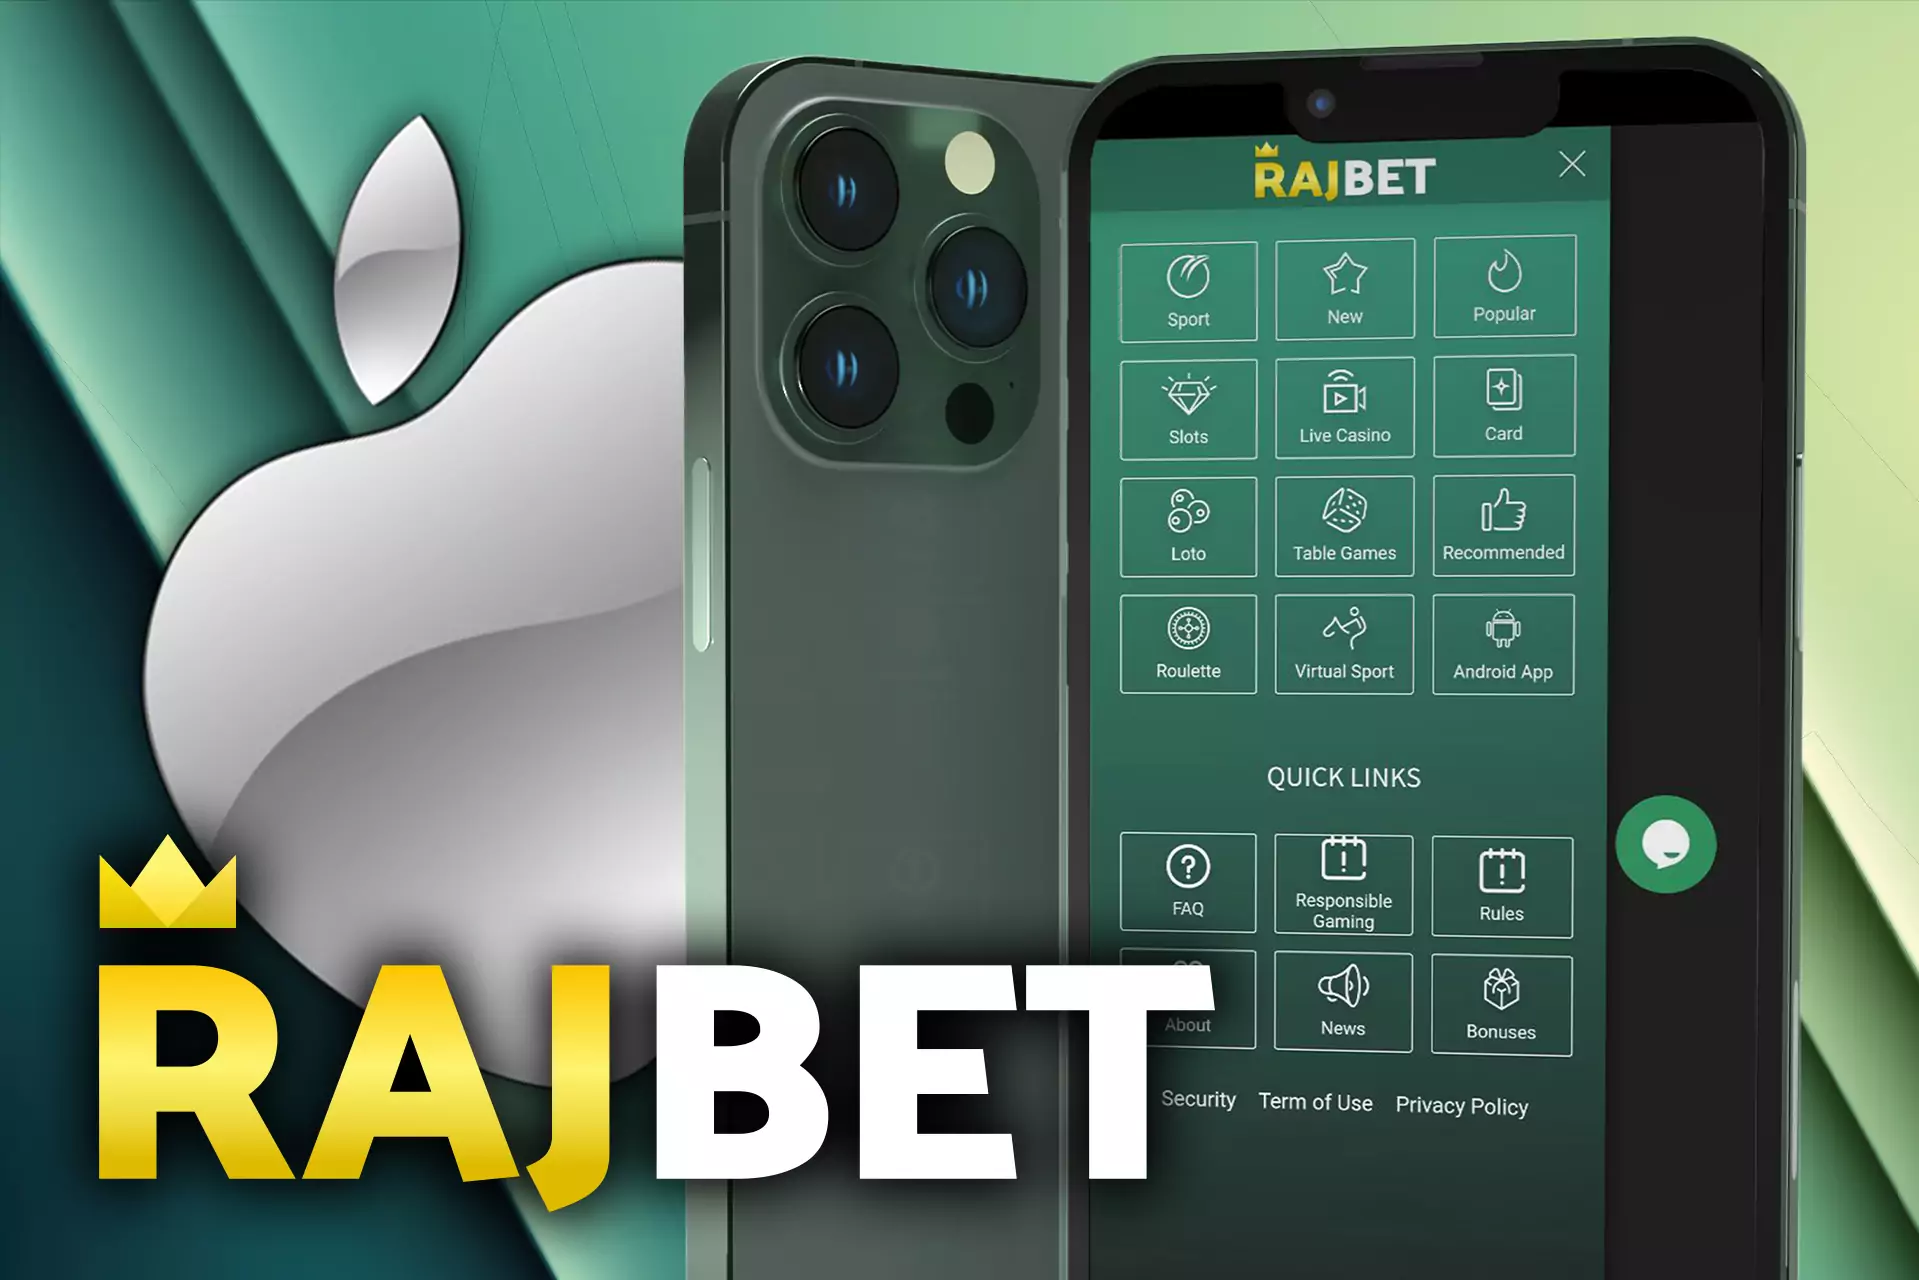 The Rajbet app for iOS is in development.